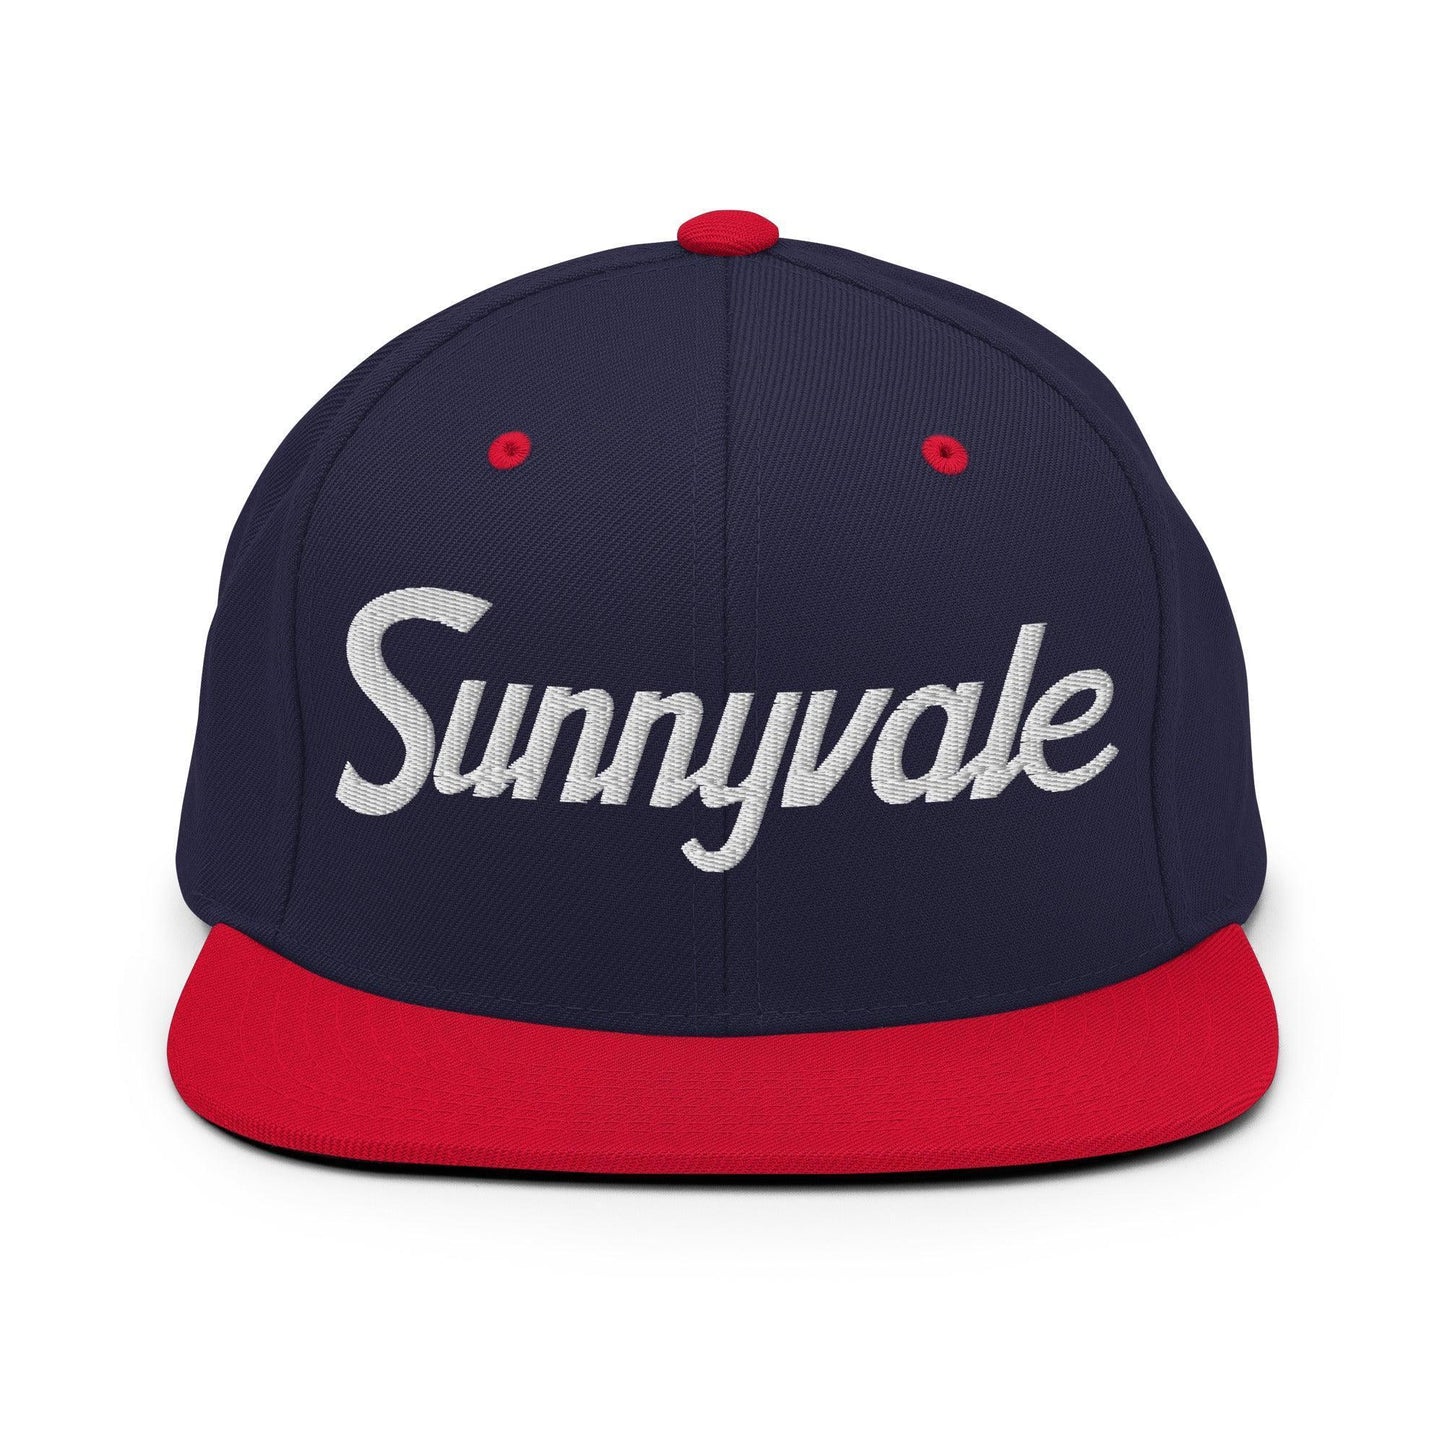 Sunnyvale Script Snapback Hat Navy/ Red